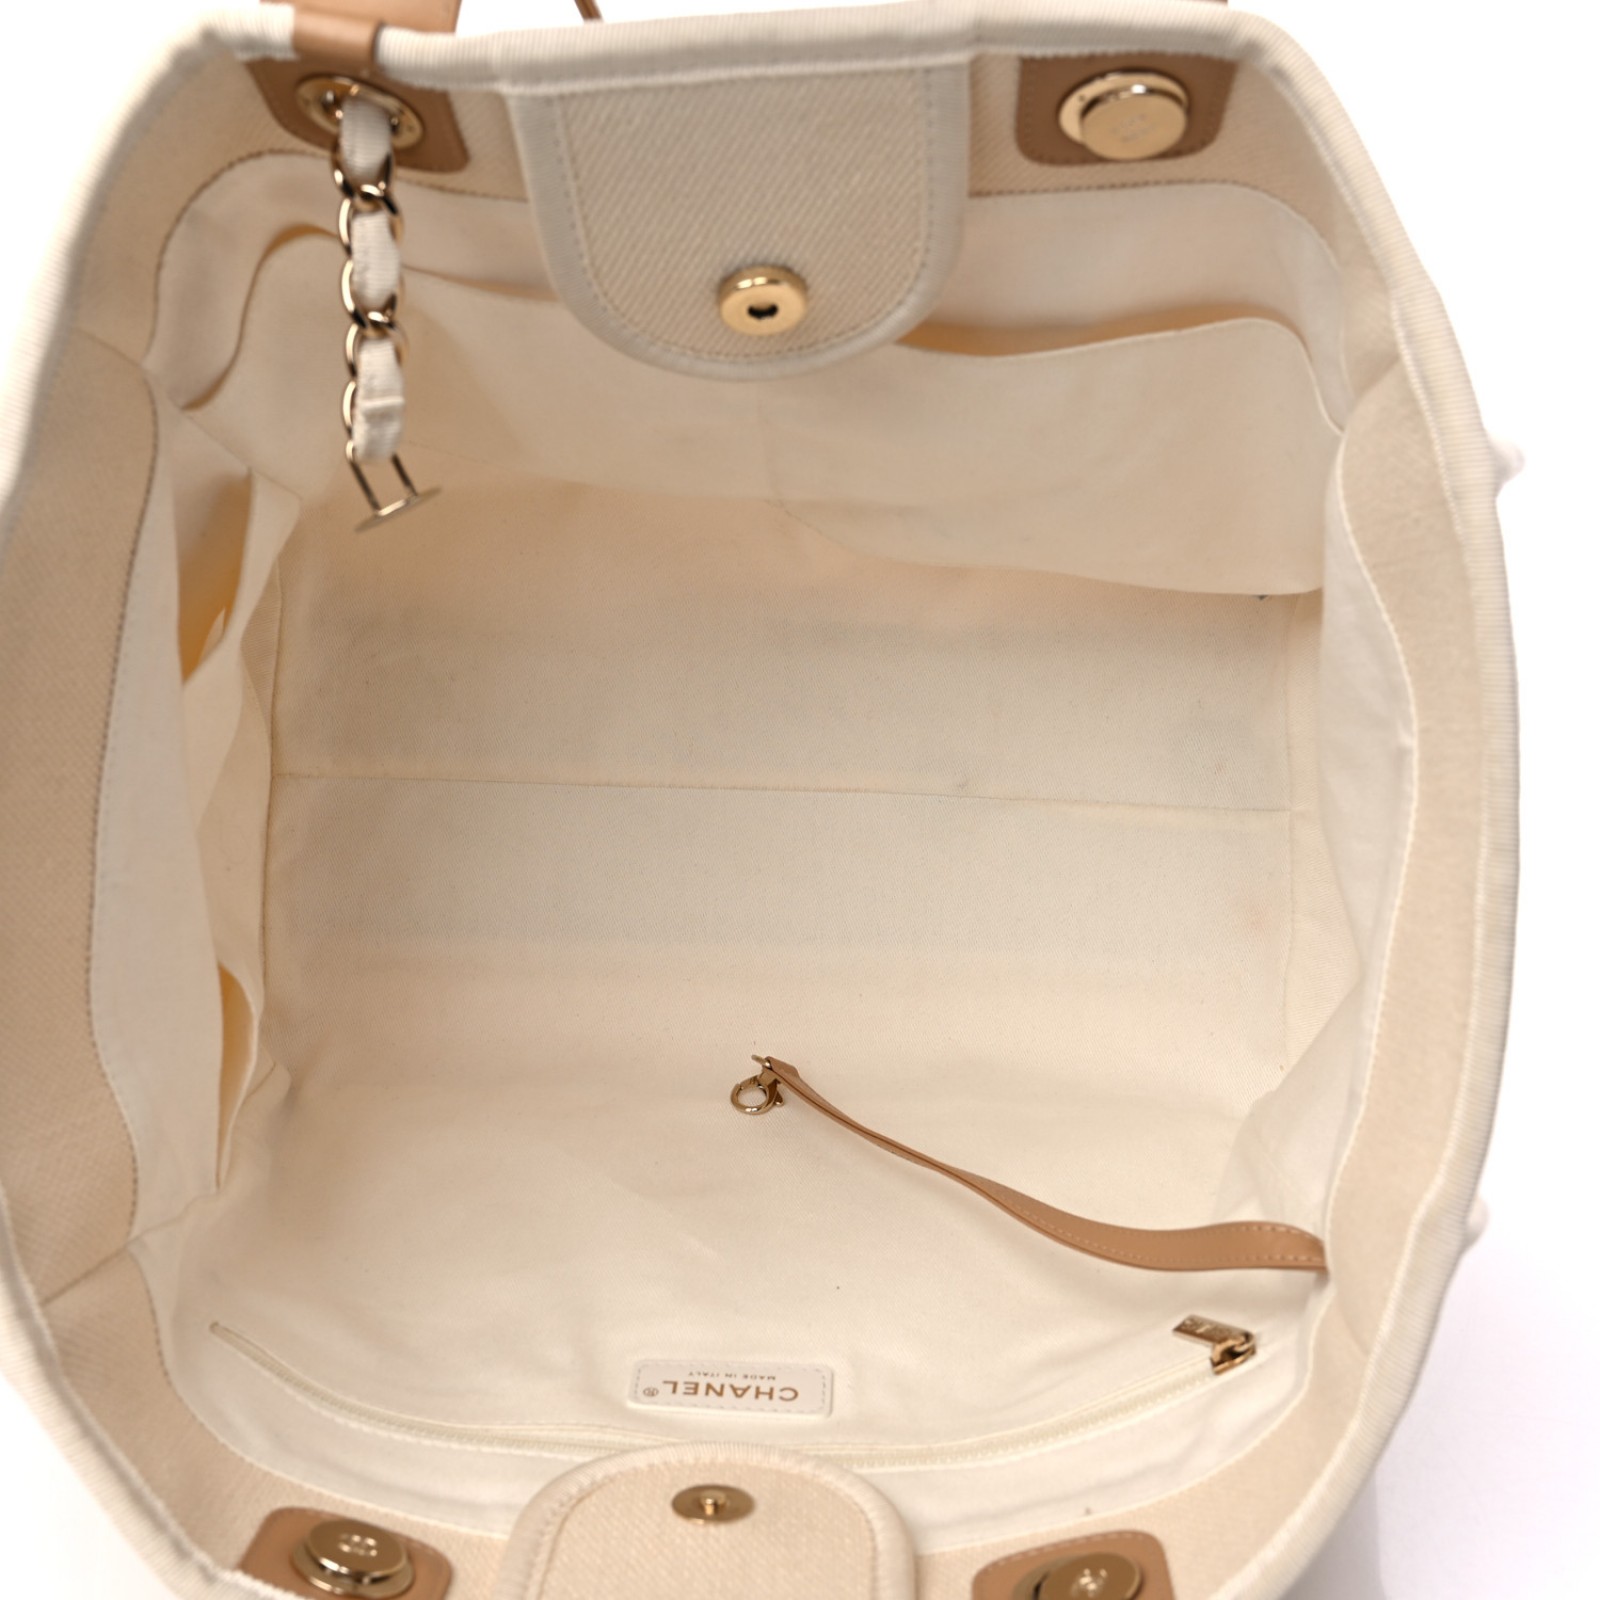 Chanel Medium Deauville Tote Bag